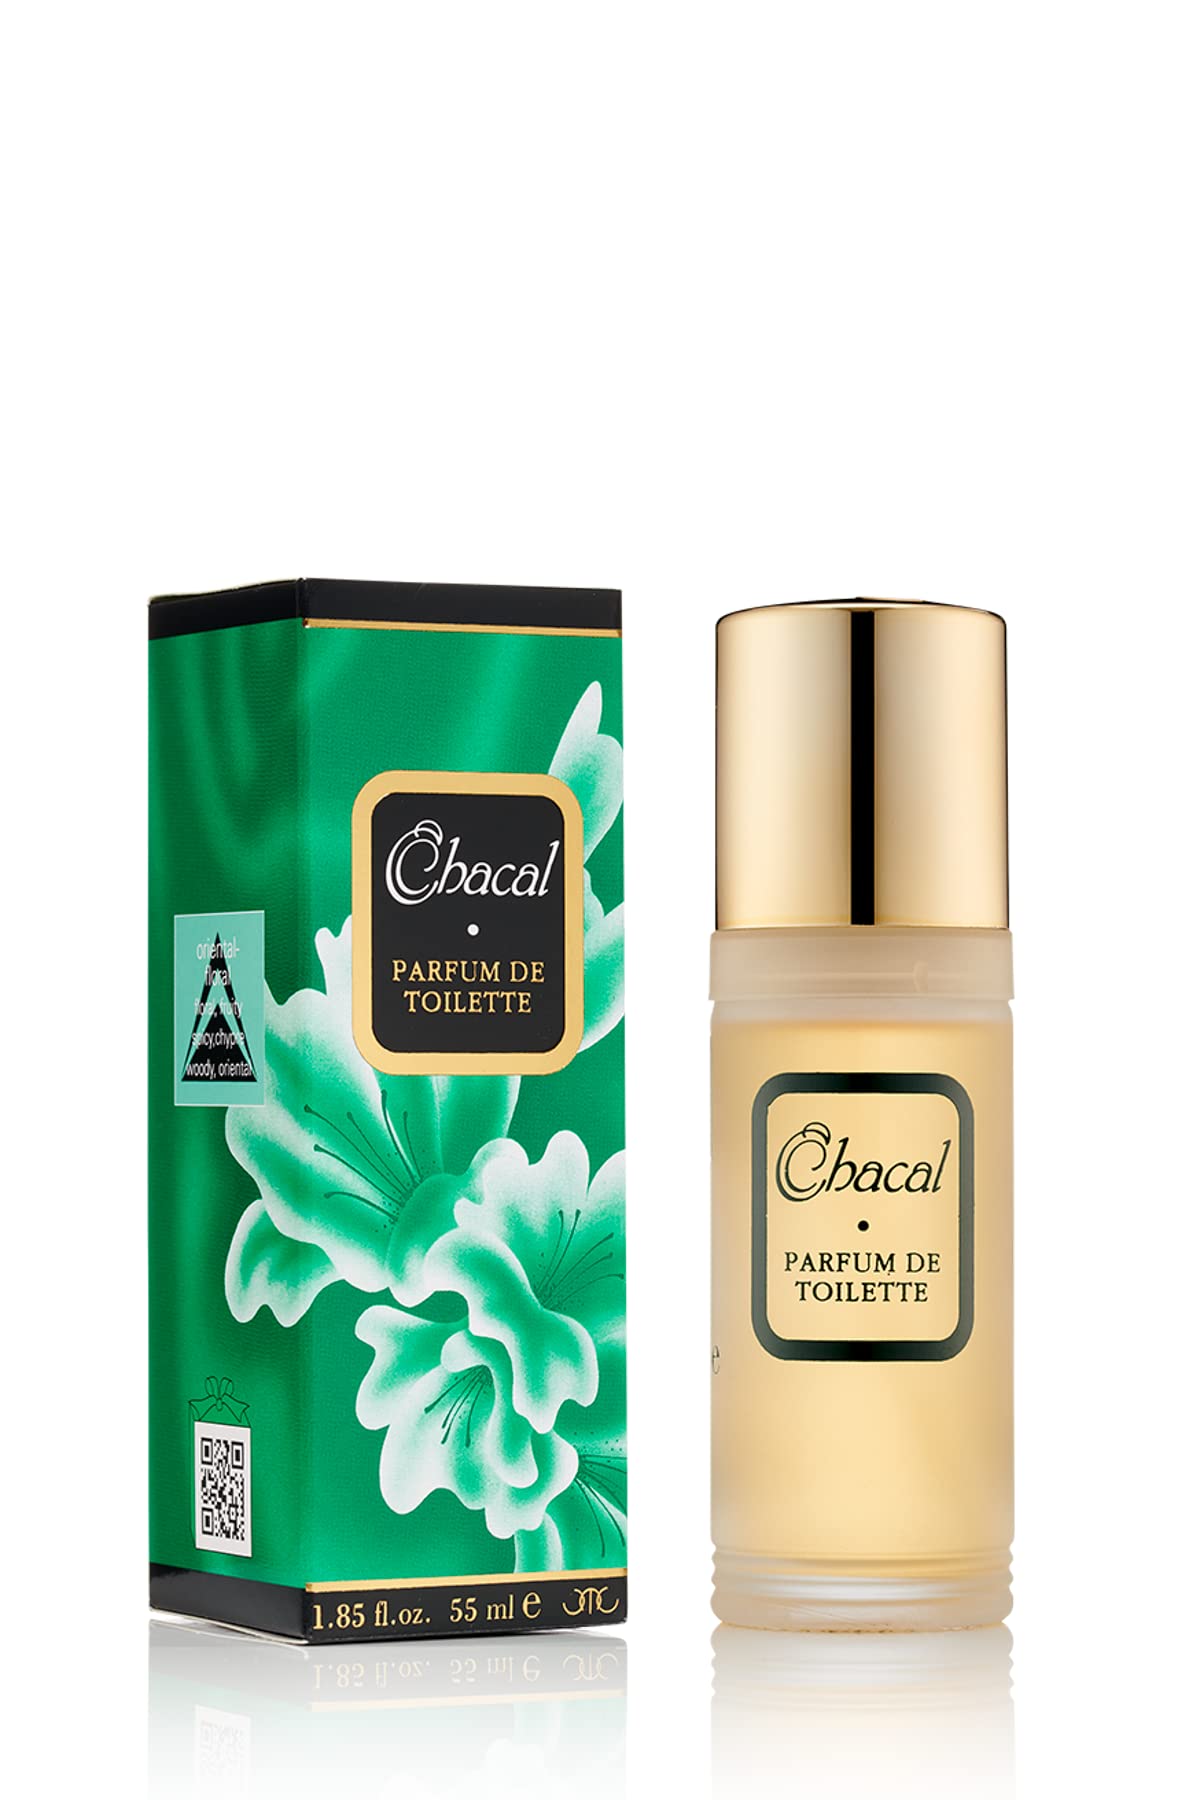 UTC Chacal - Fragrance for Women - 55ml Parfum de Toilette, made by Milton-Lloyd